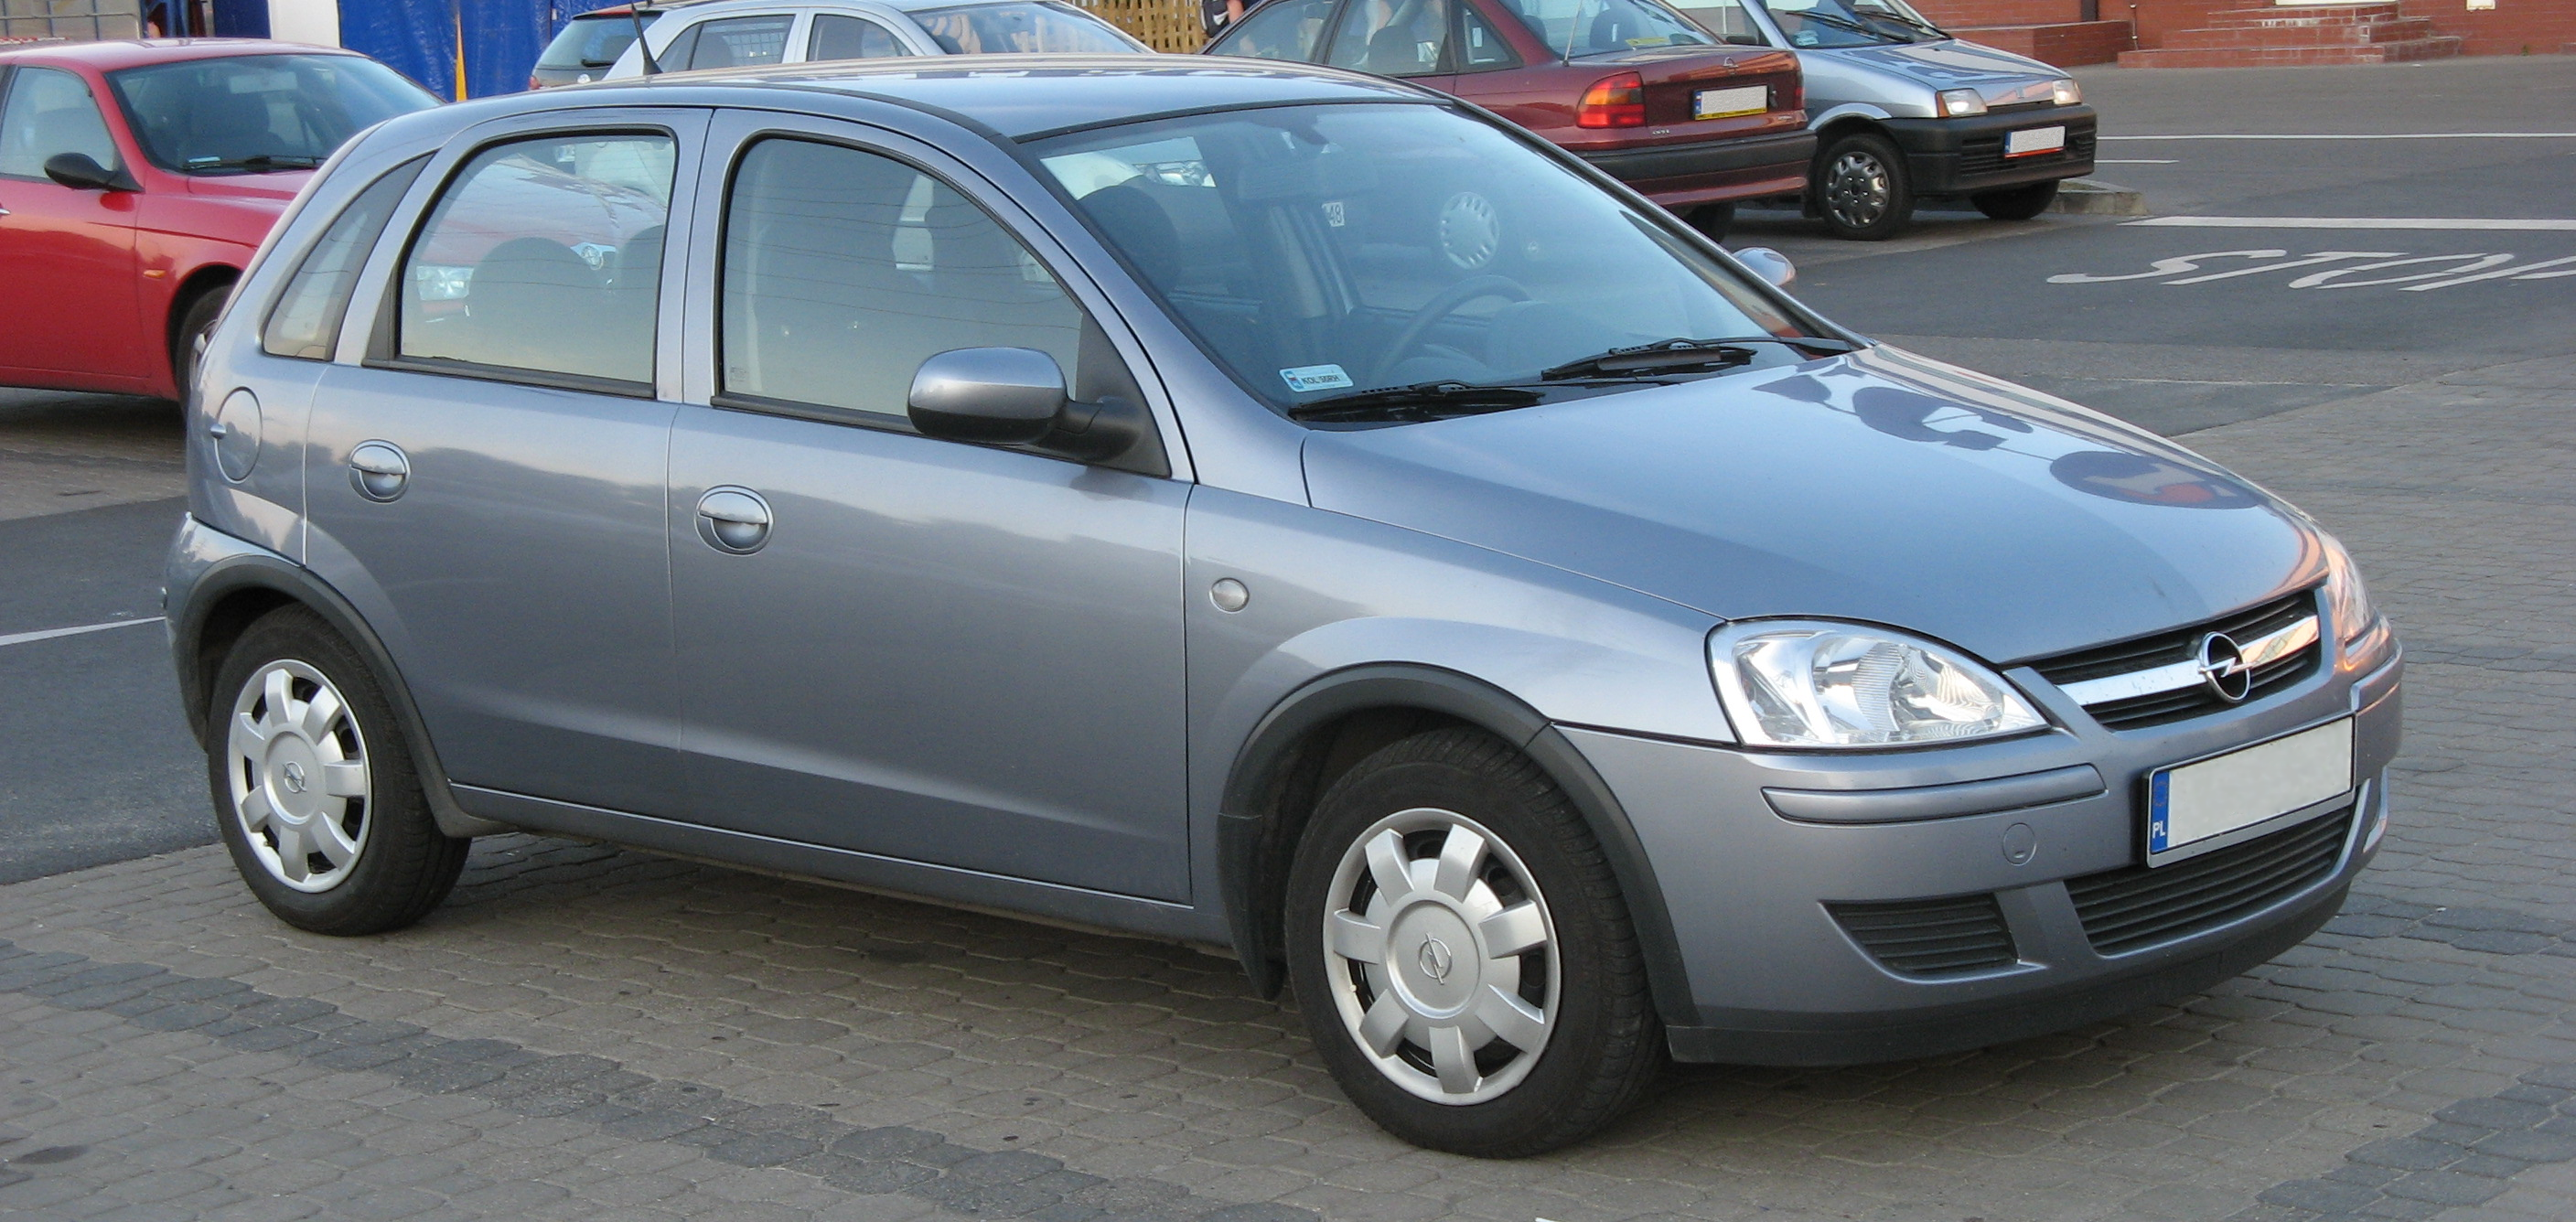 File:Opel Corsa C 5-door.png - Wikimedia Commons